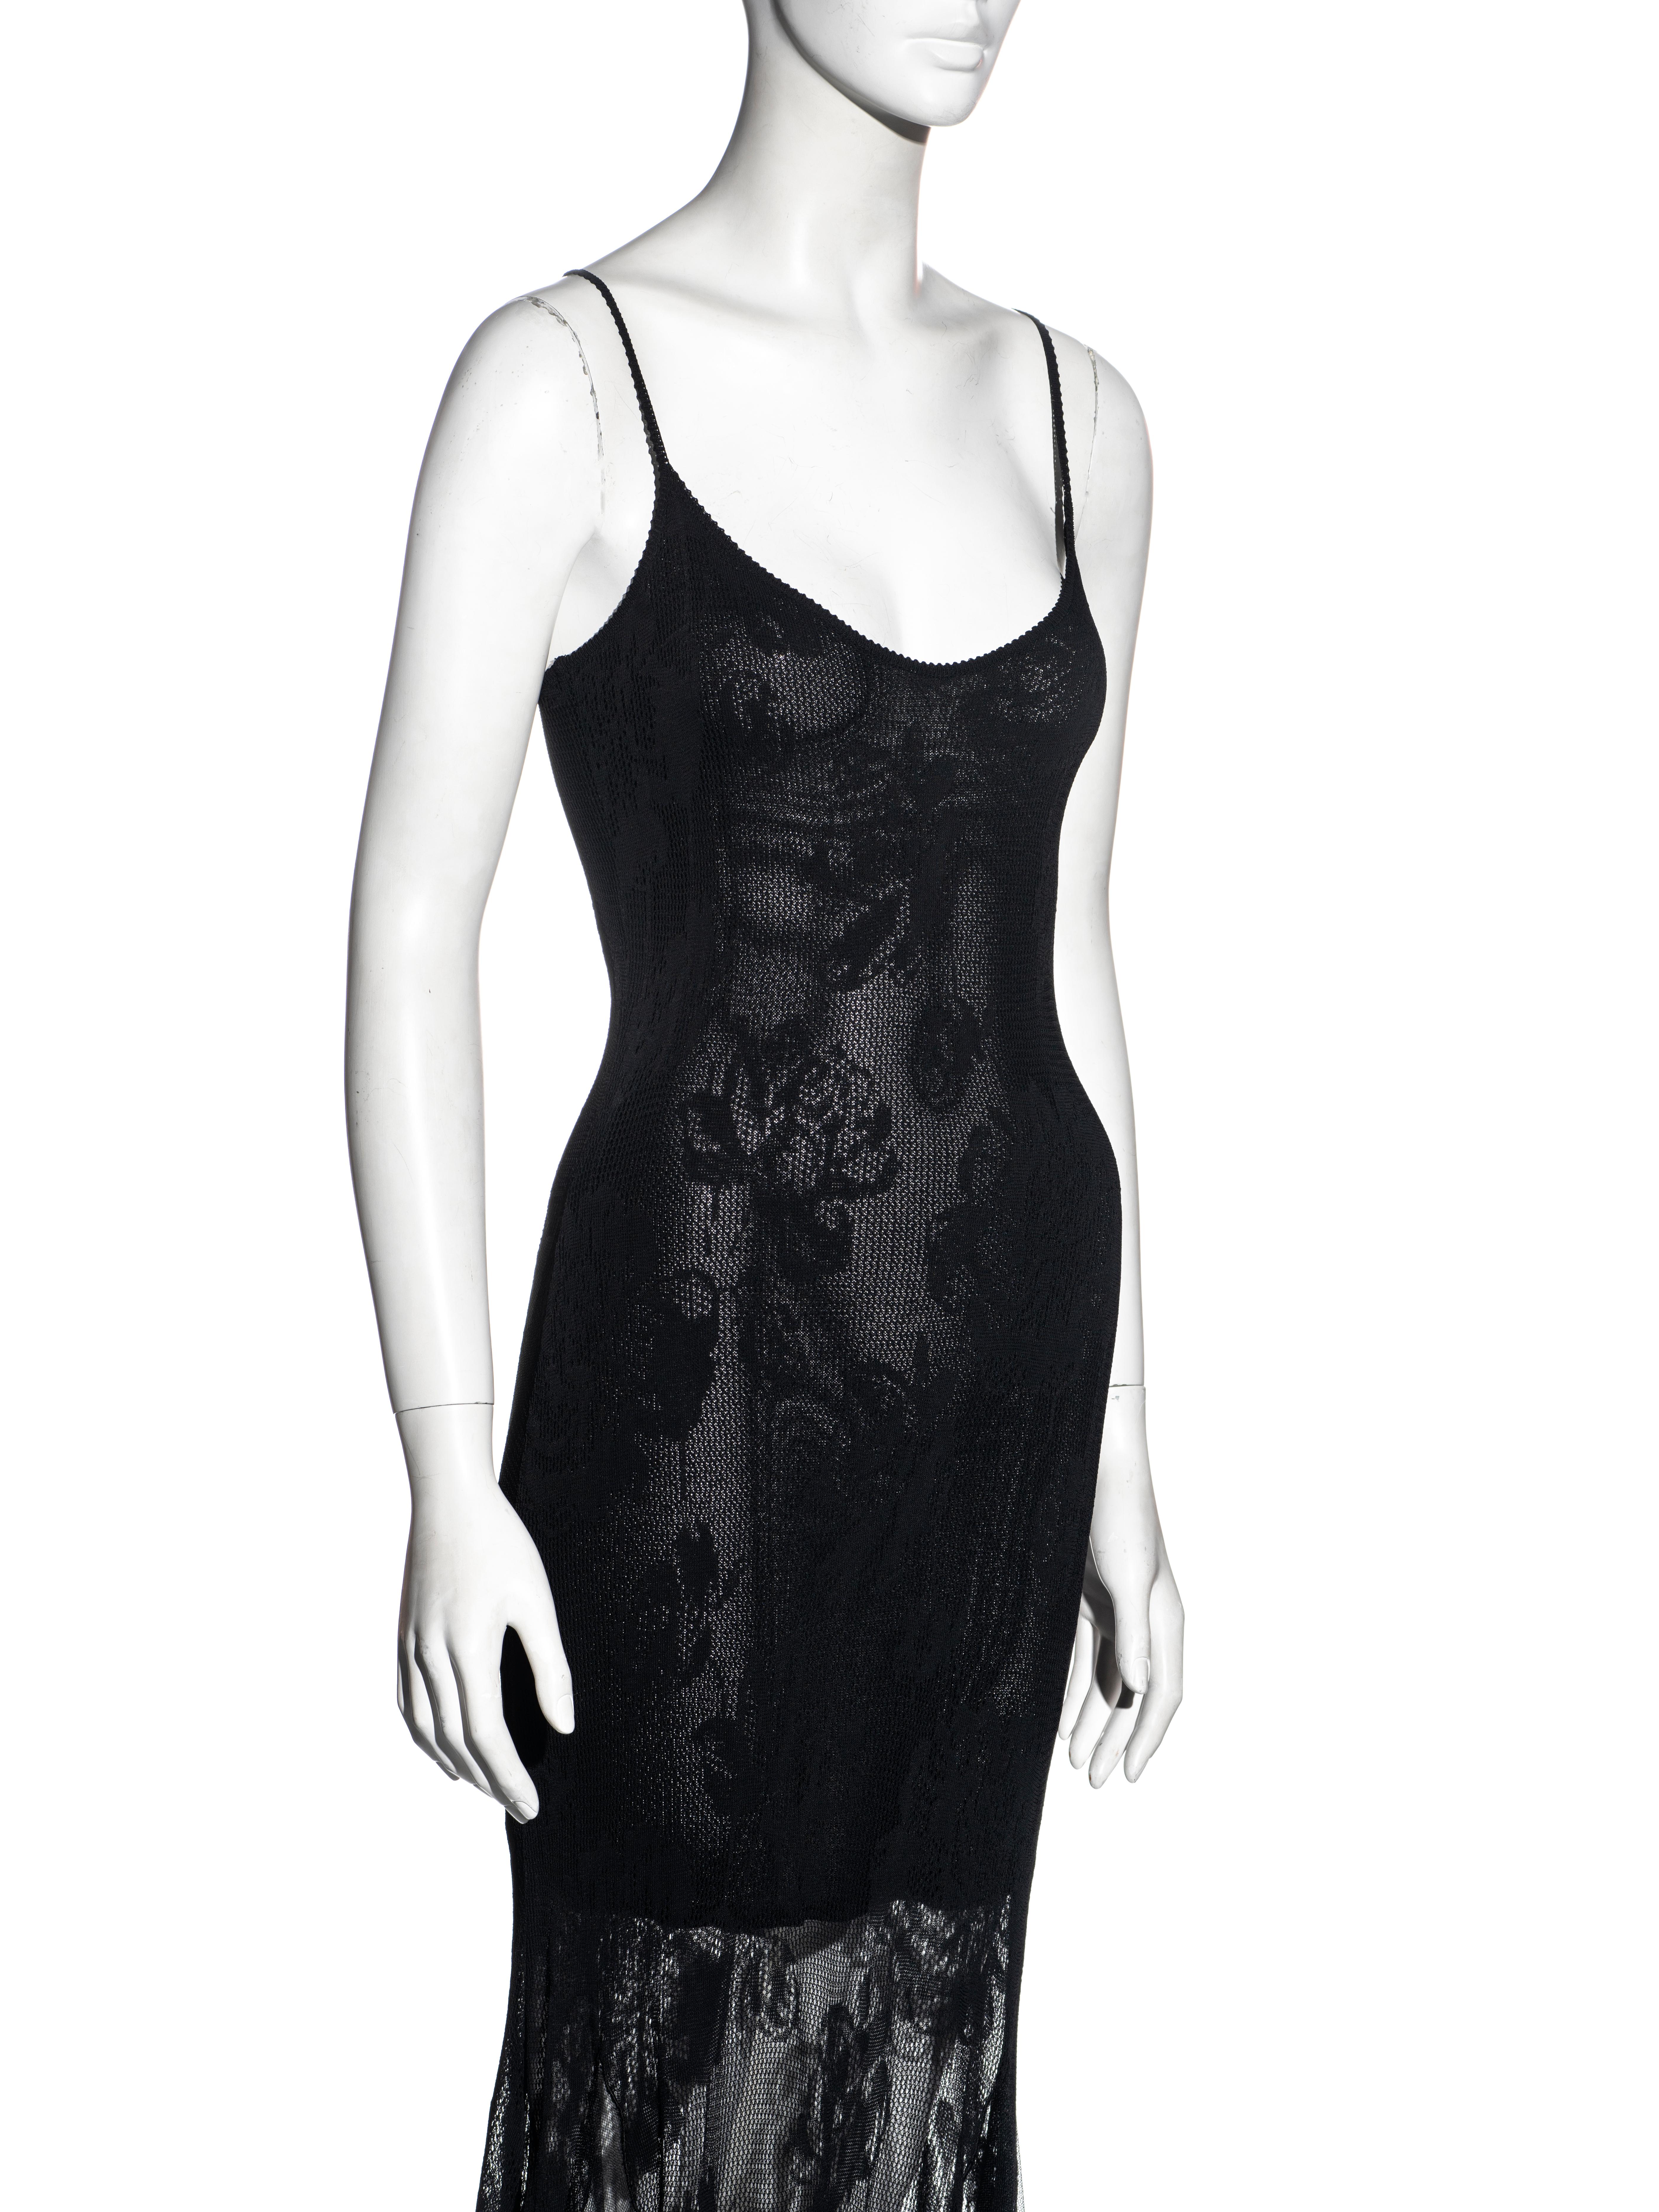 Women's Christian Dior by John Galliano black viscose knit lace evening dress, ss 2002